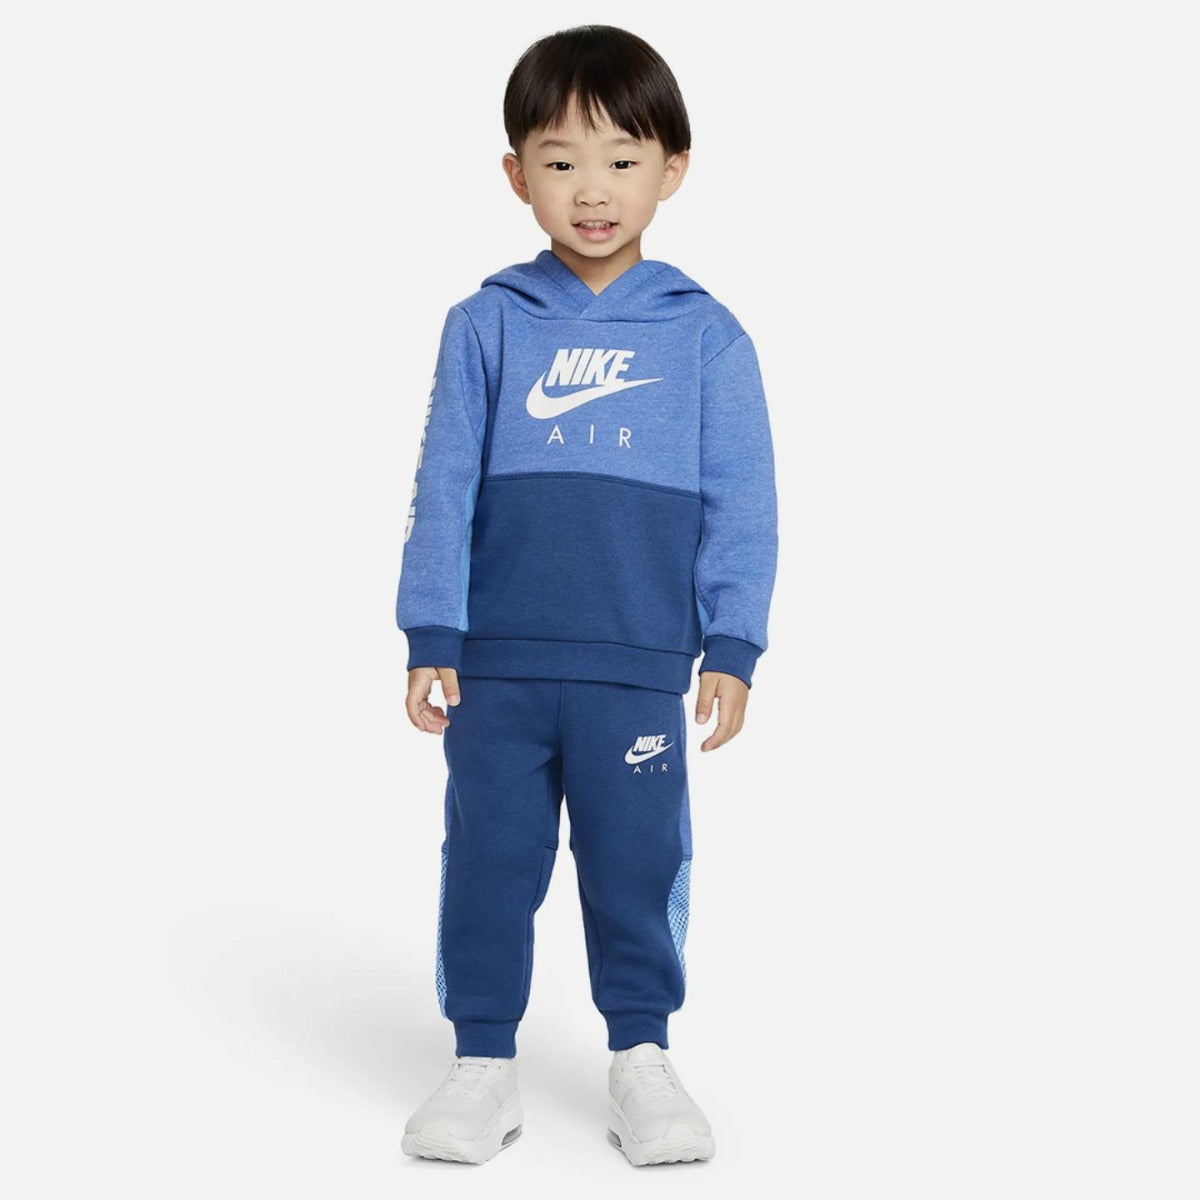 Nike Air Baby Tracksuit Set - Blue/White